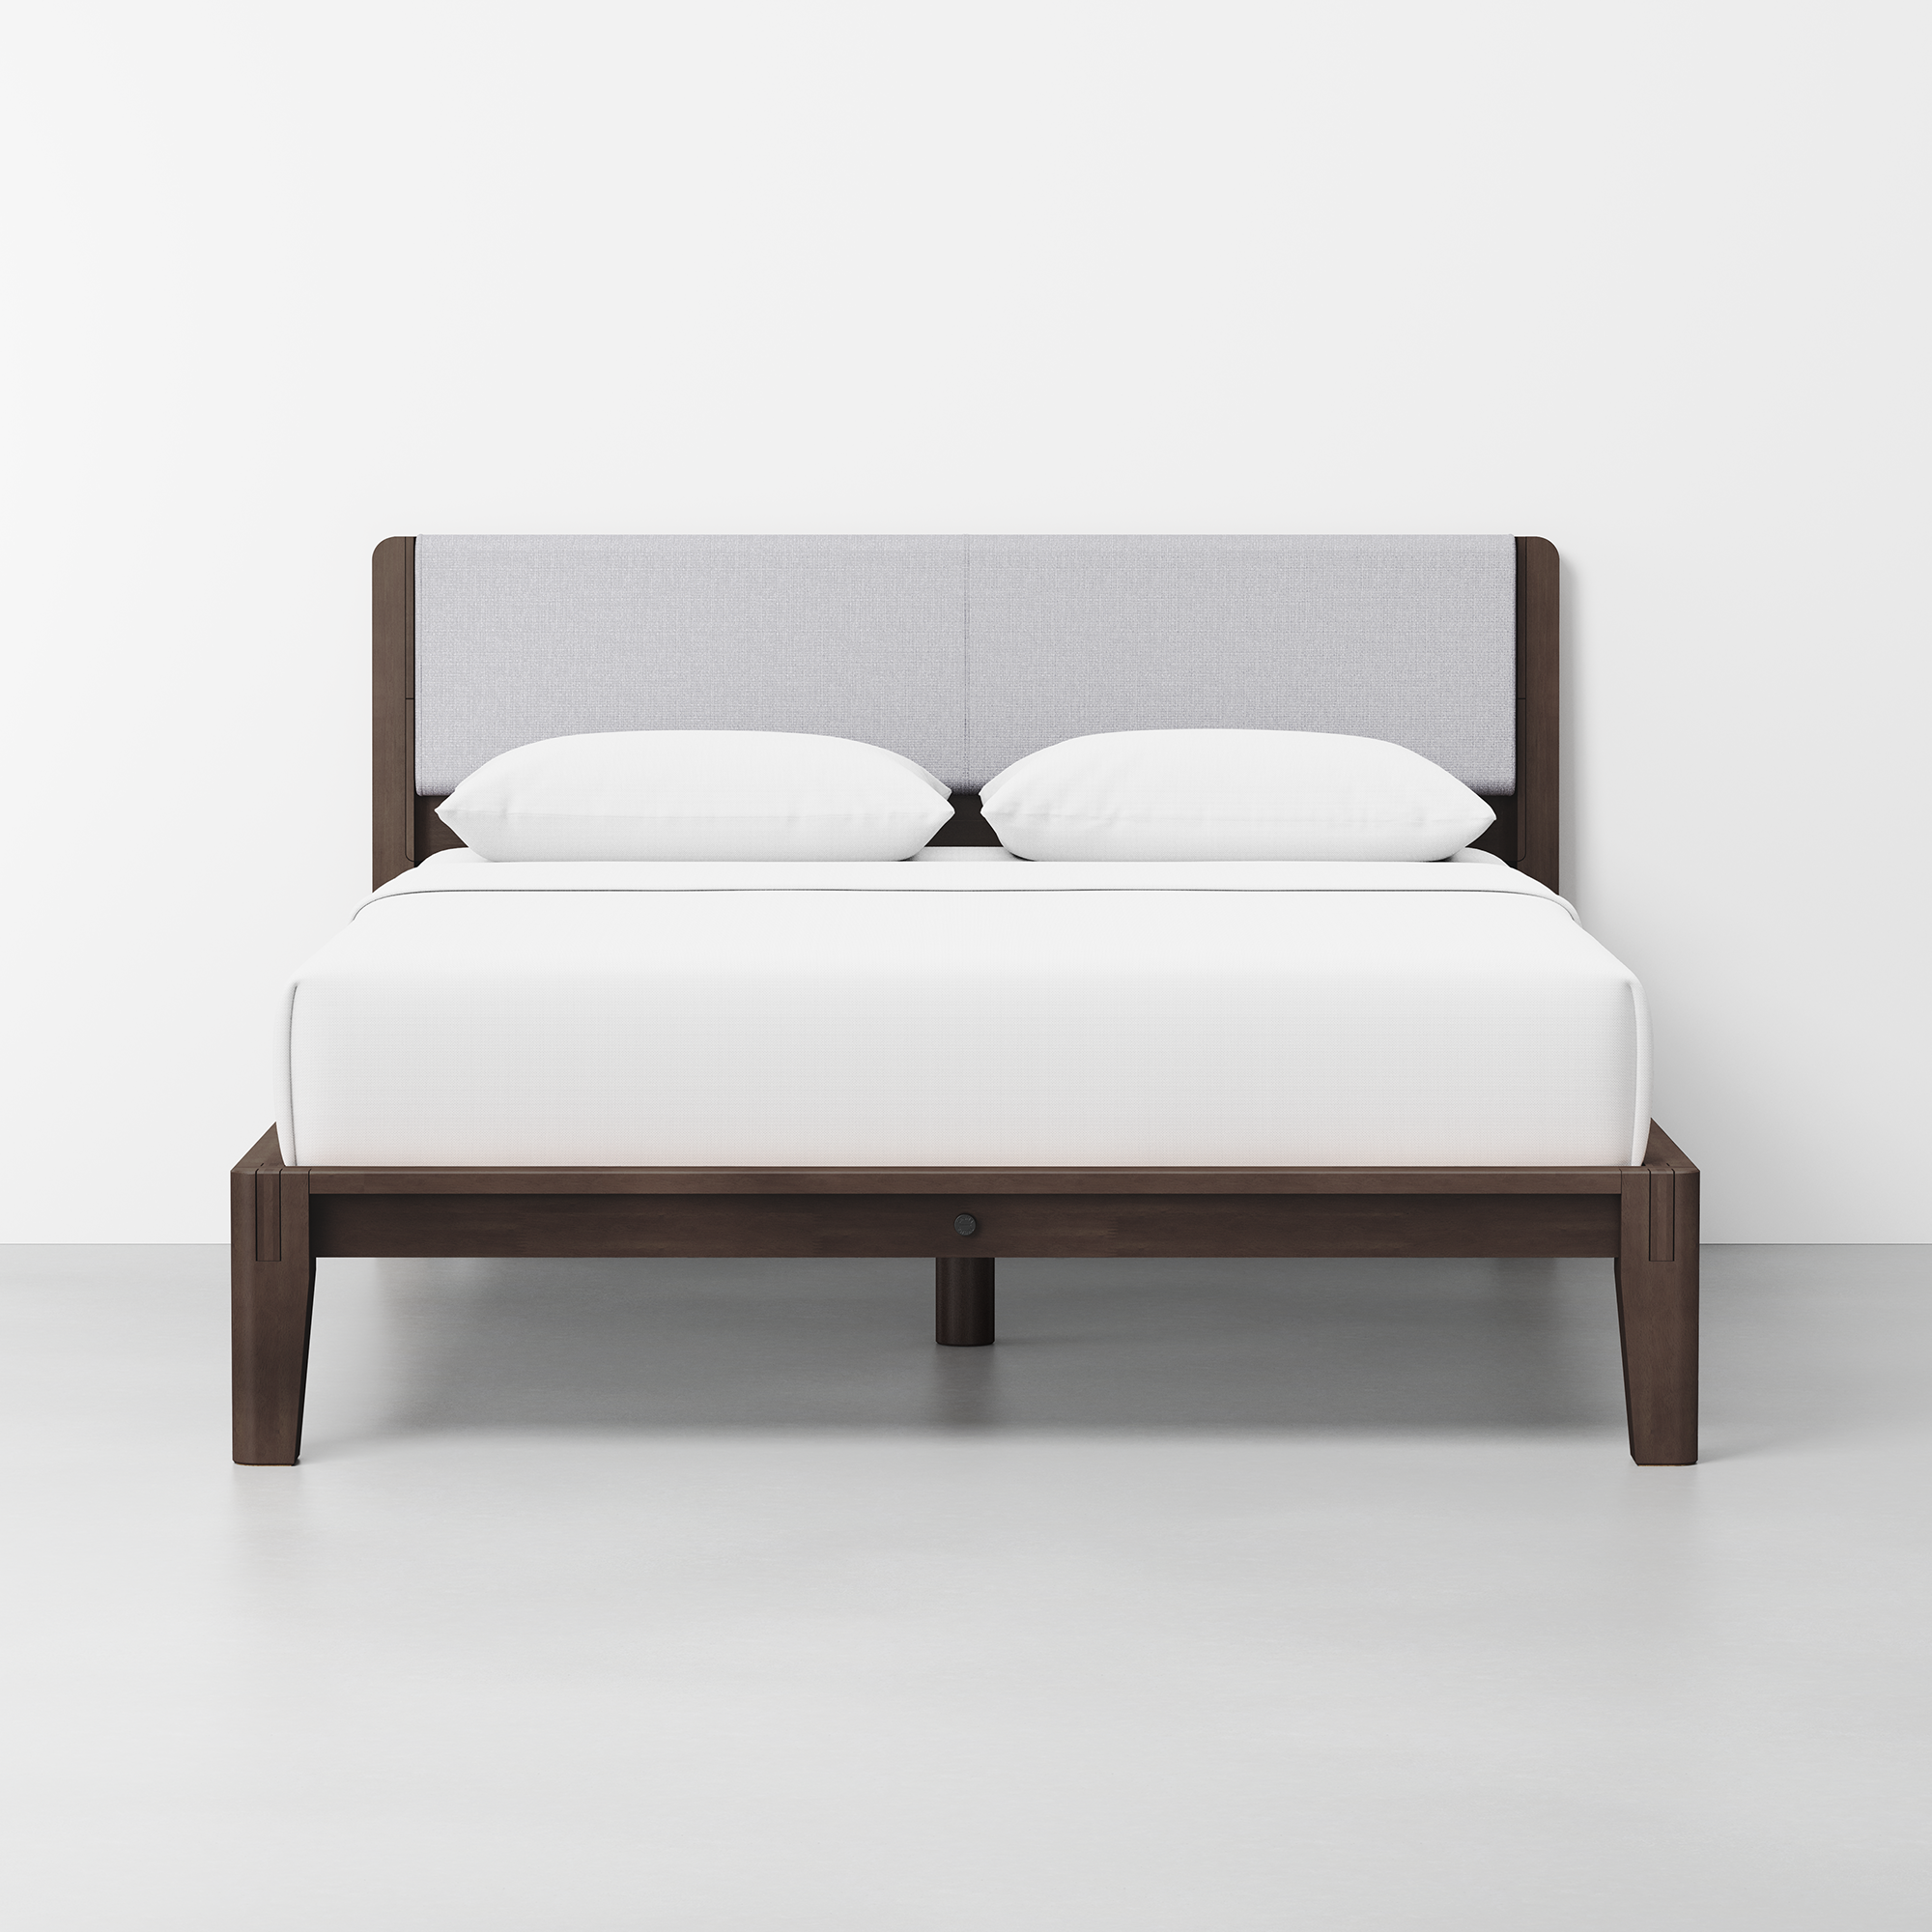 The Bed (Espresso / HB Cushion Fog Grey) - Render - Front